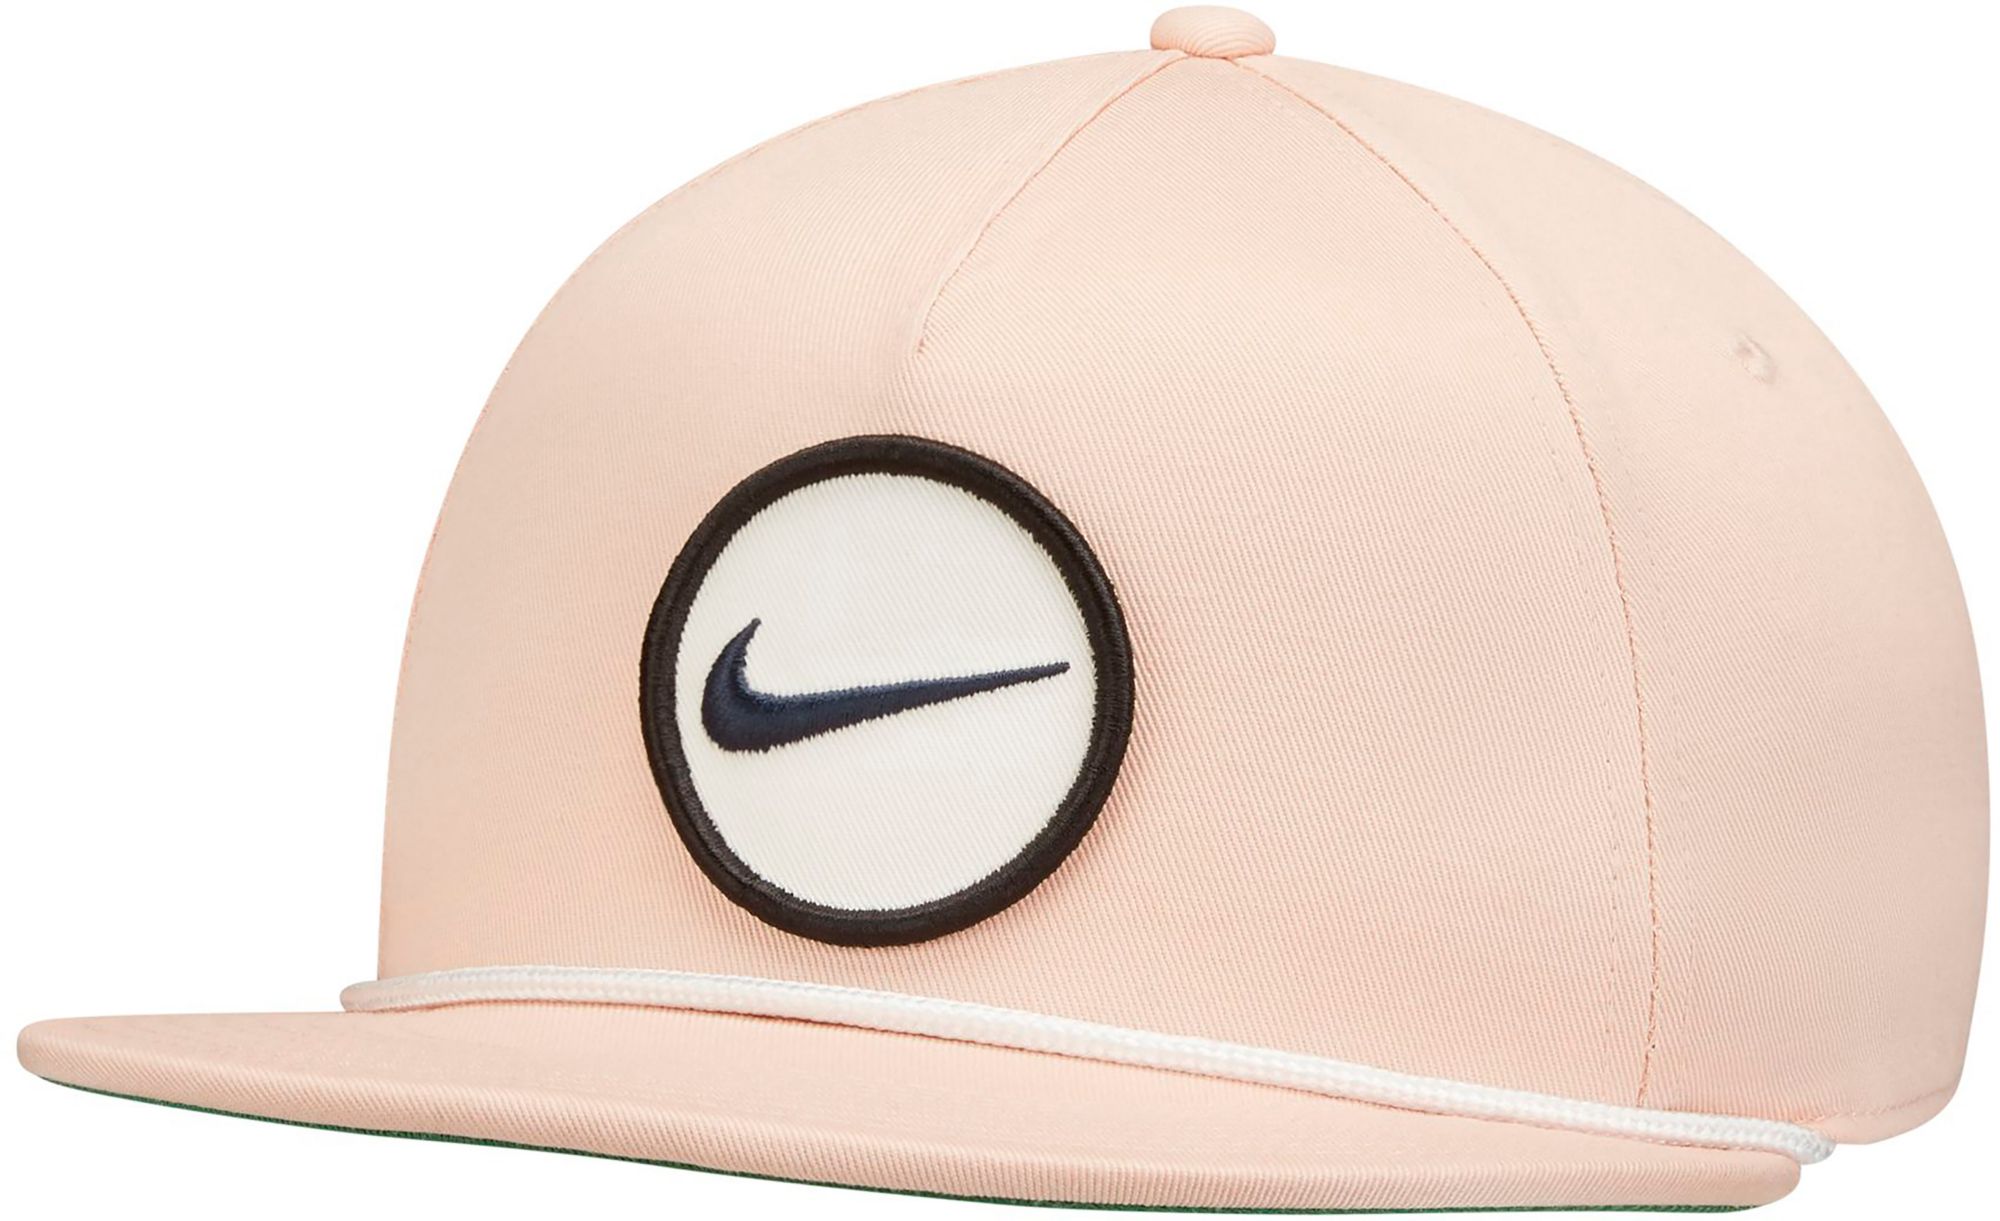 New York Mets Classic99 Swoosh Men's Nike Dri-FIT MLB Hat.